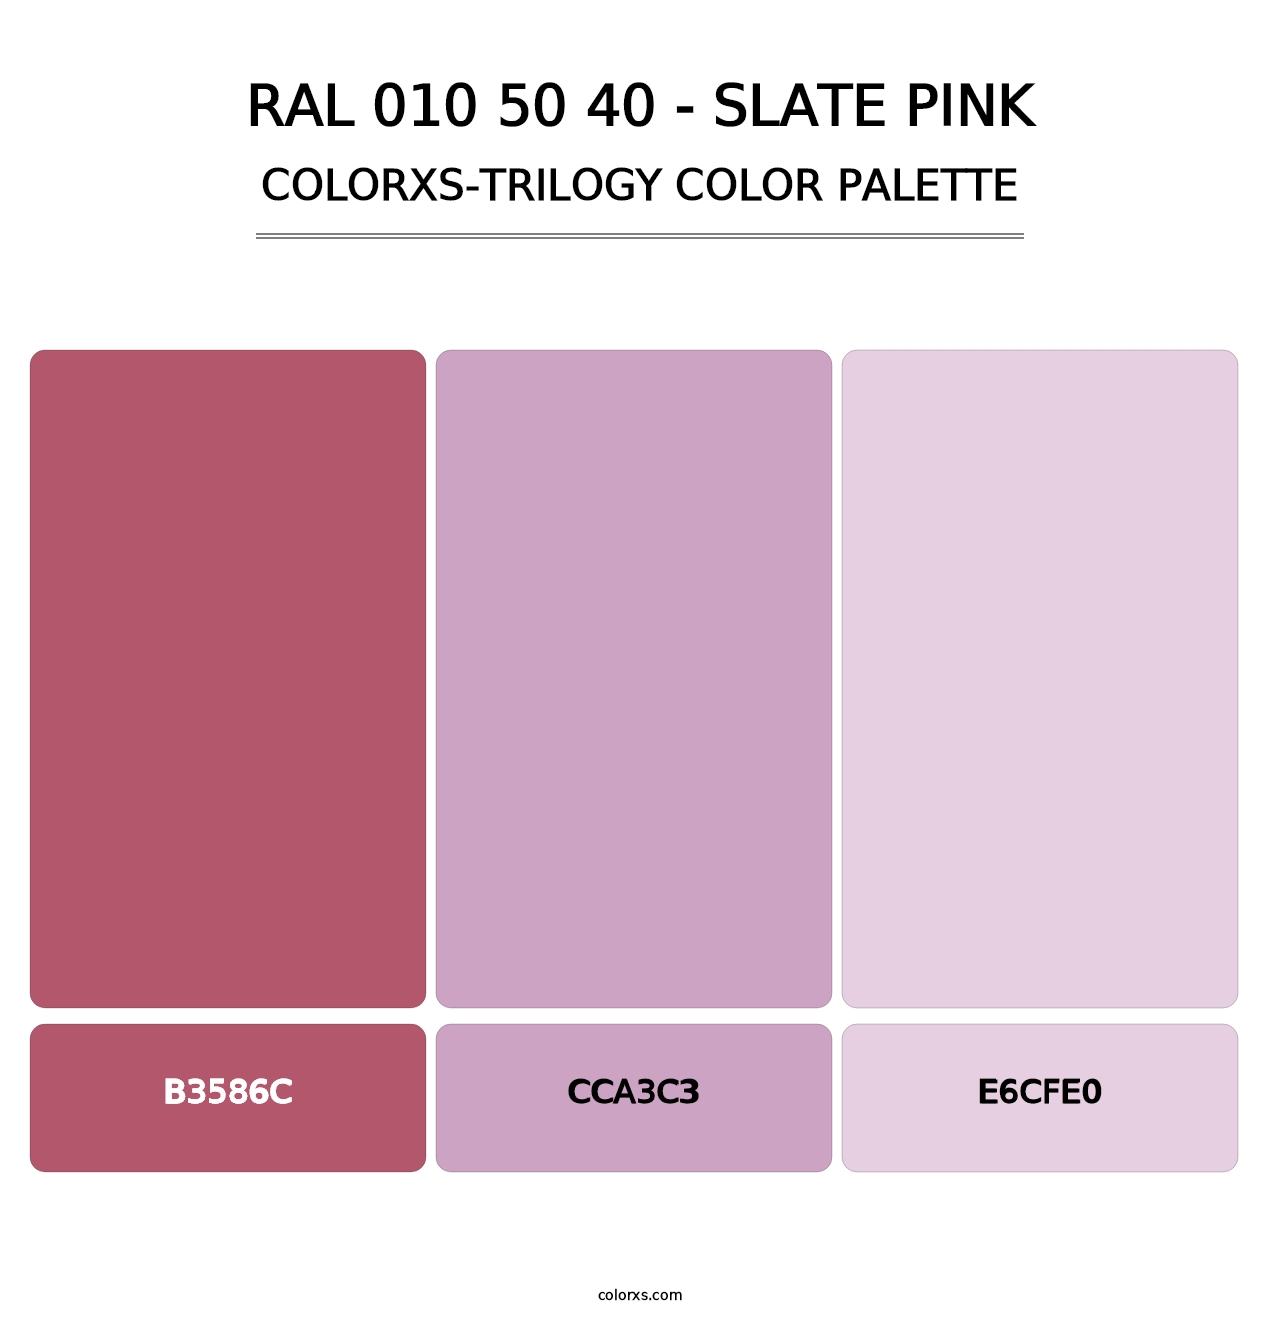 RAL 010 50 40 - Slate Pink - Colorxs Trilogy Palette